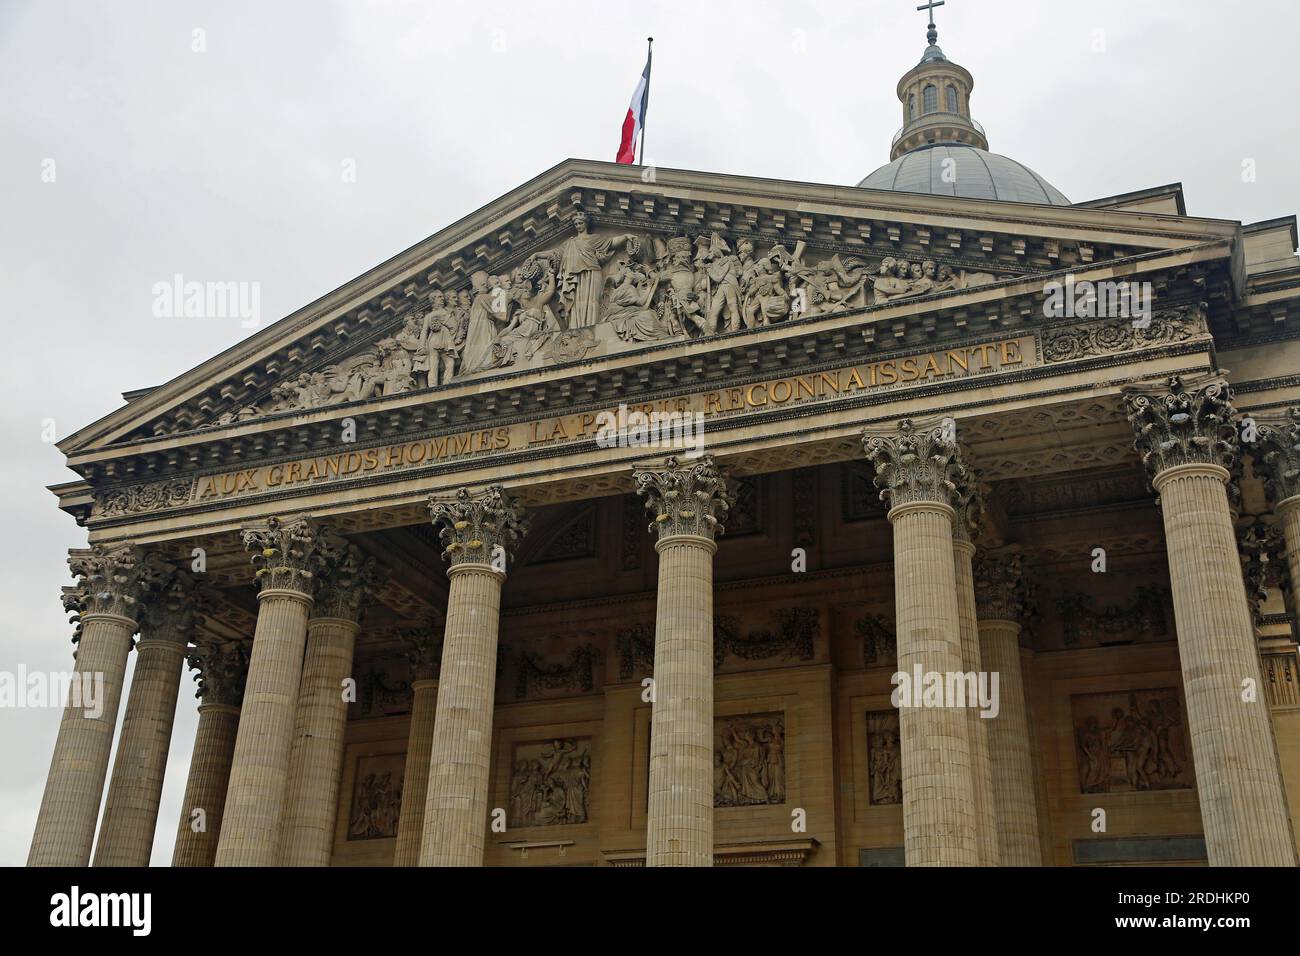 Corinthian column and the pediment - Pantheon - Paris, France Stock Photo